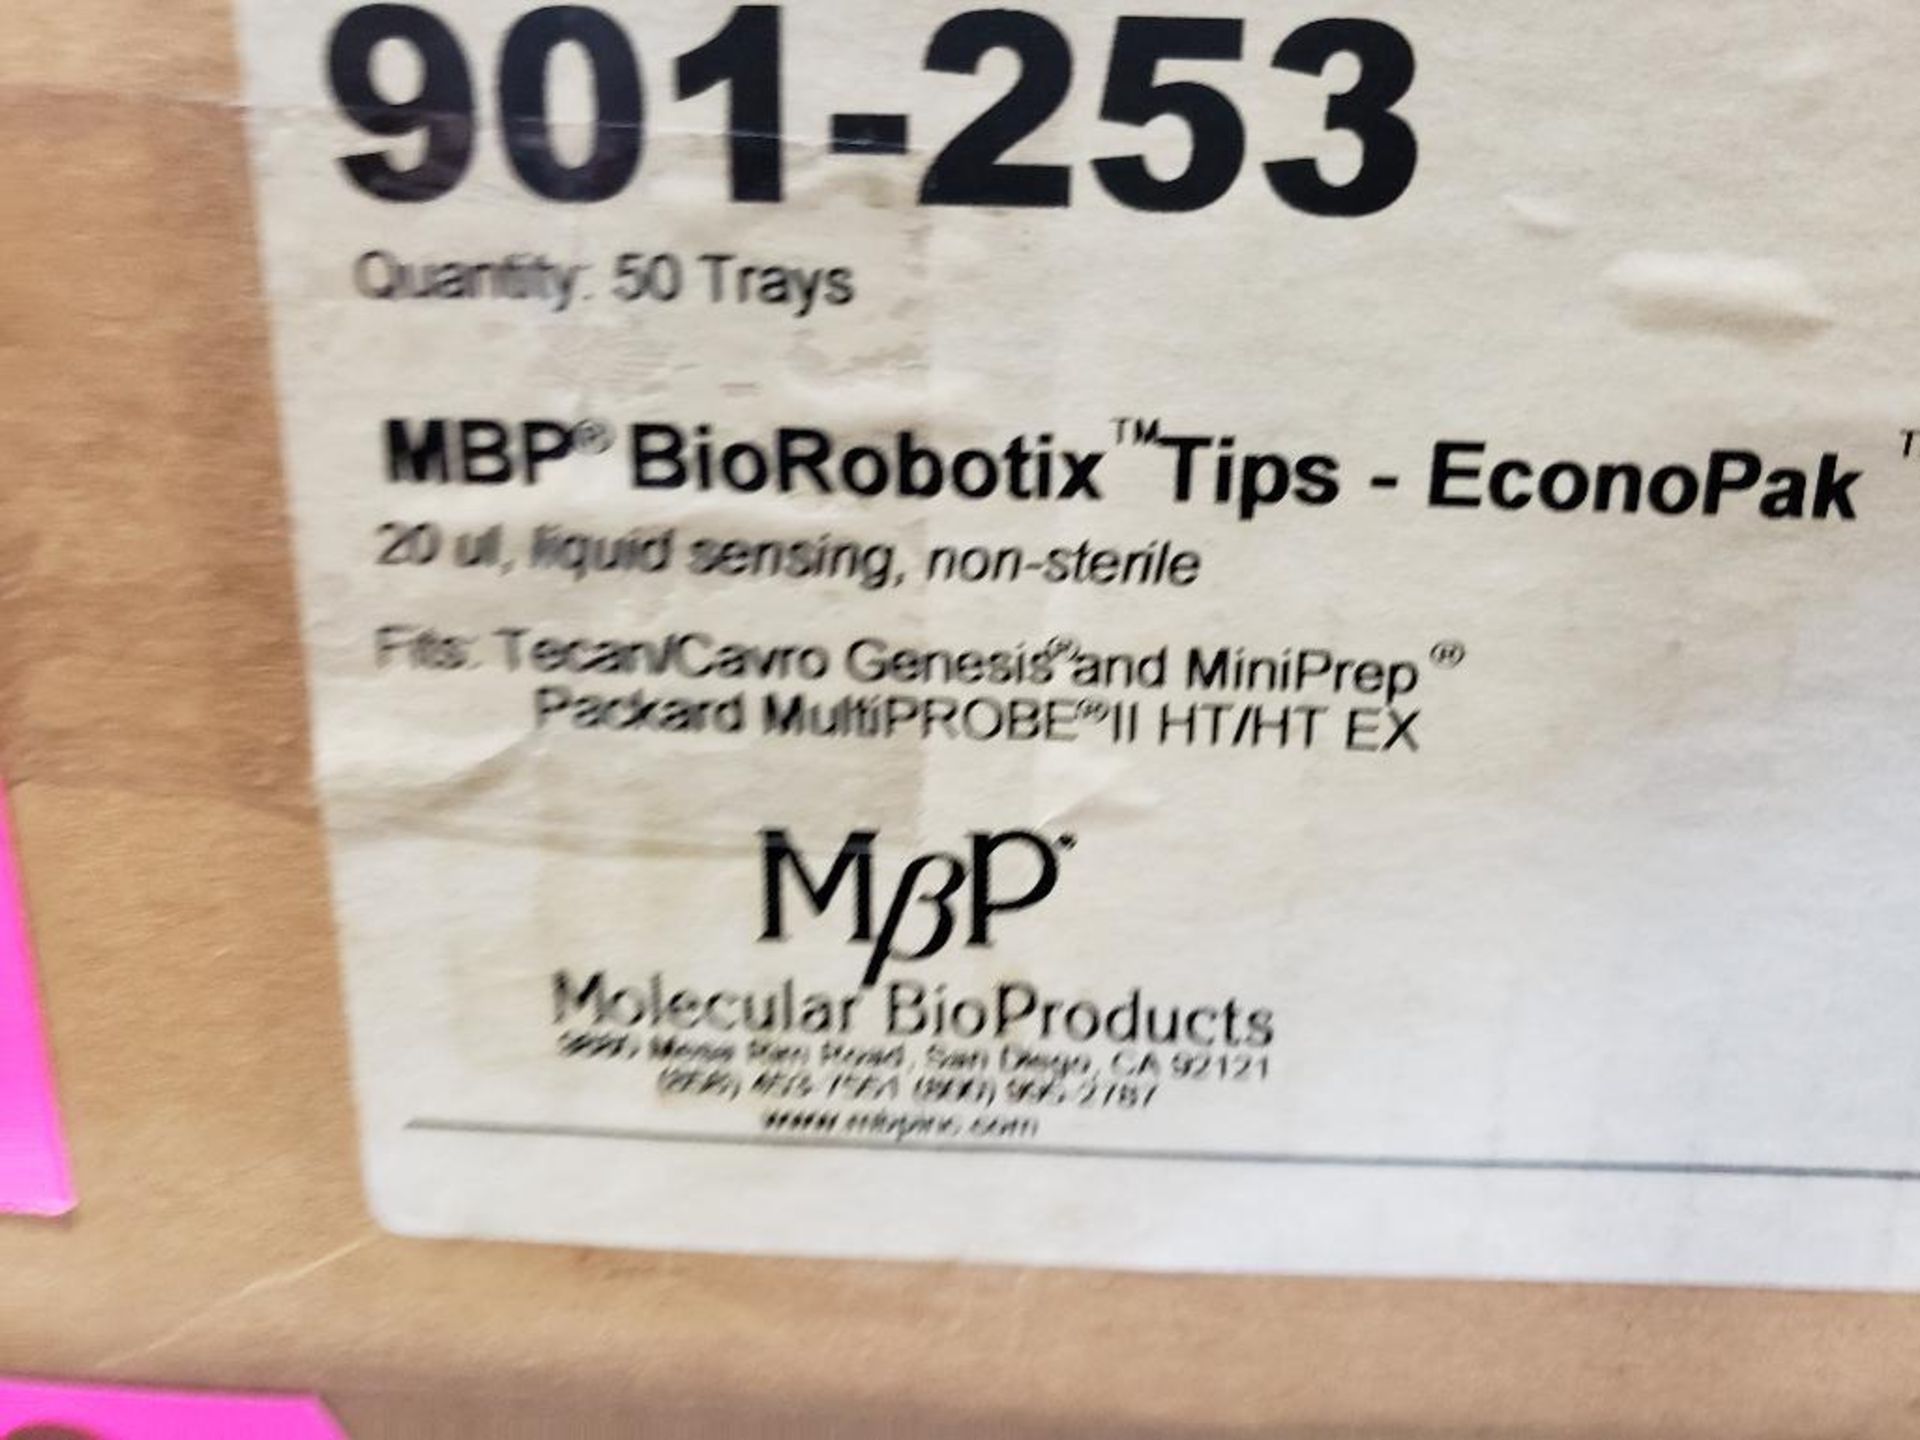 Qty 50 - MBP Molecular BioProducts BioRobotix Tips EconoPak 901-253. - Image 2 of 2